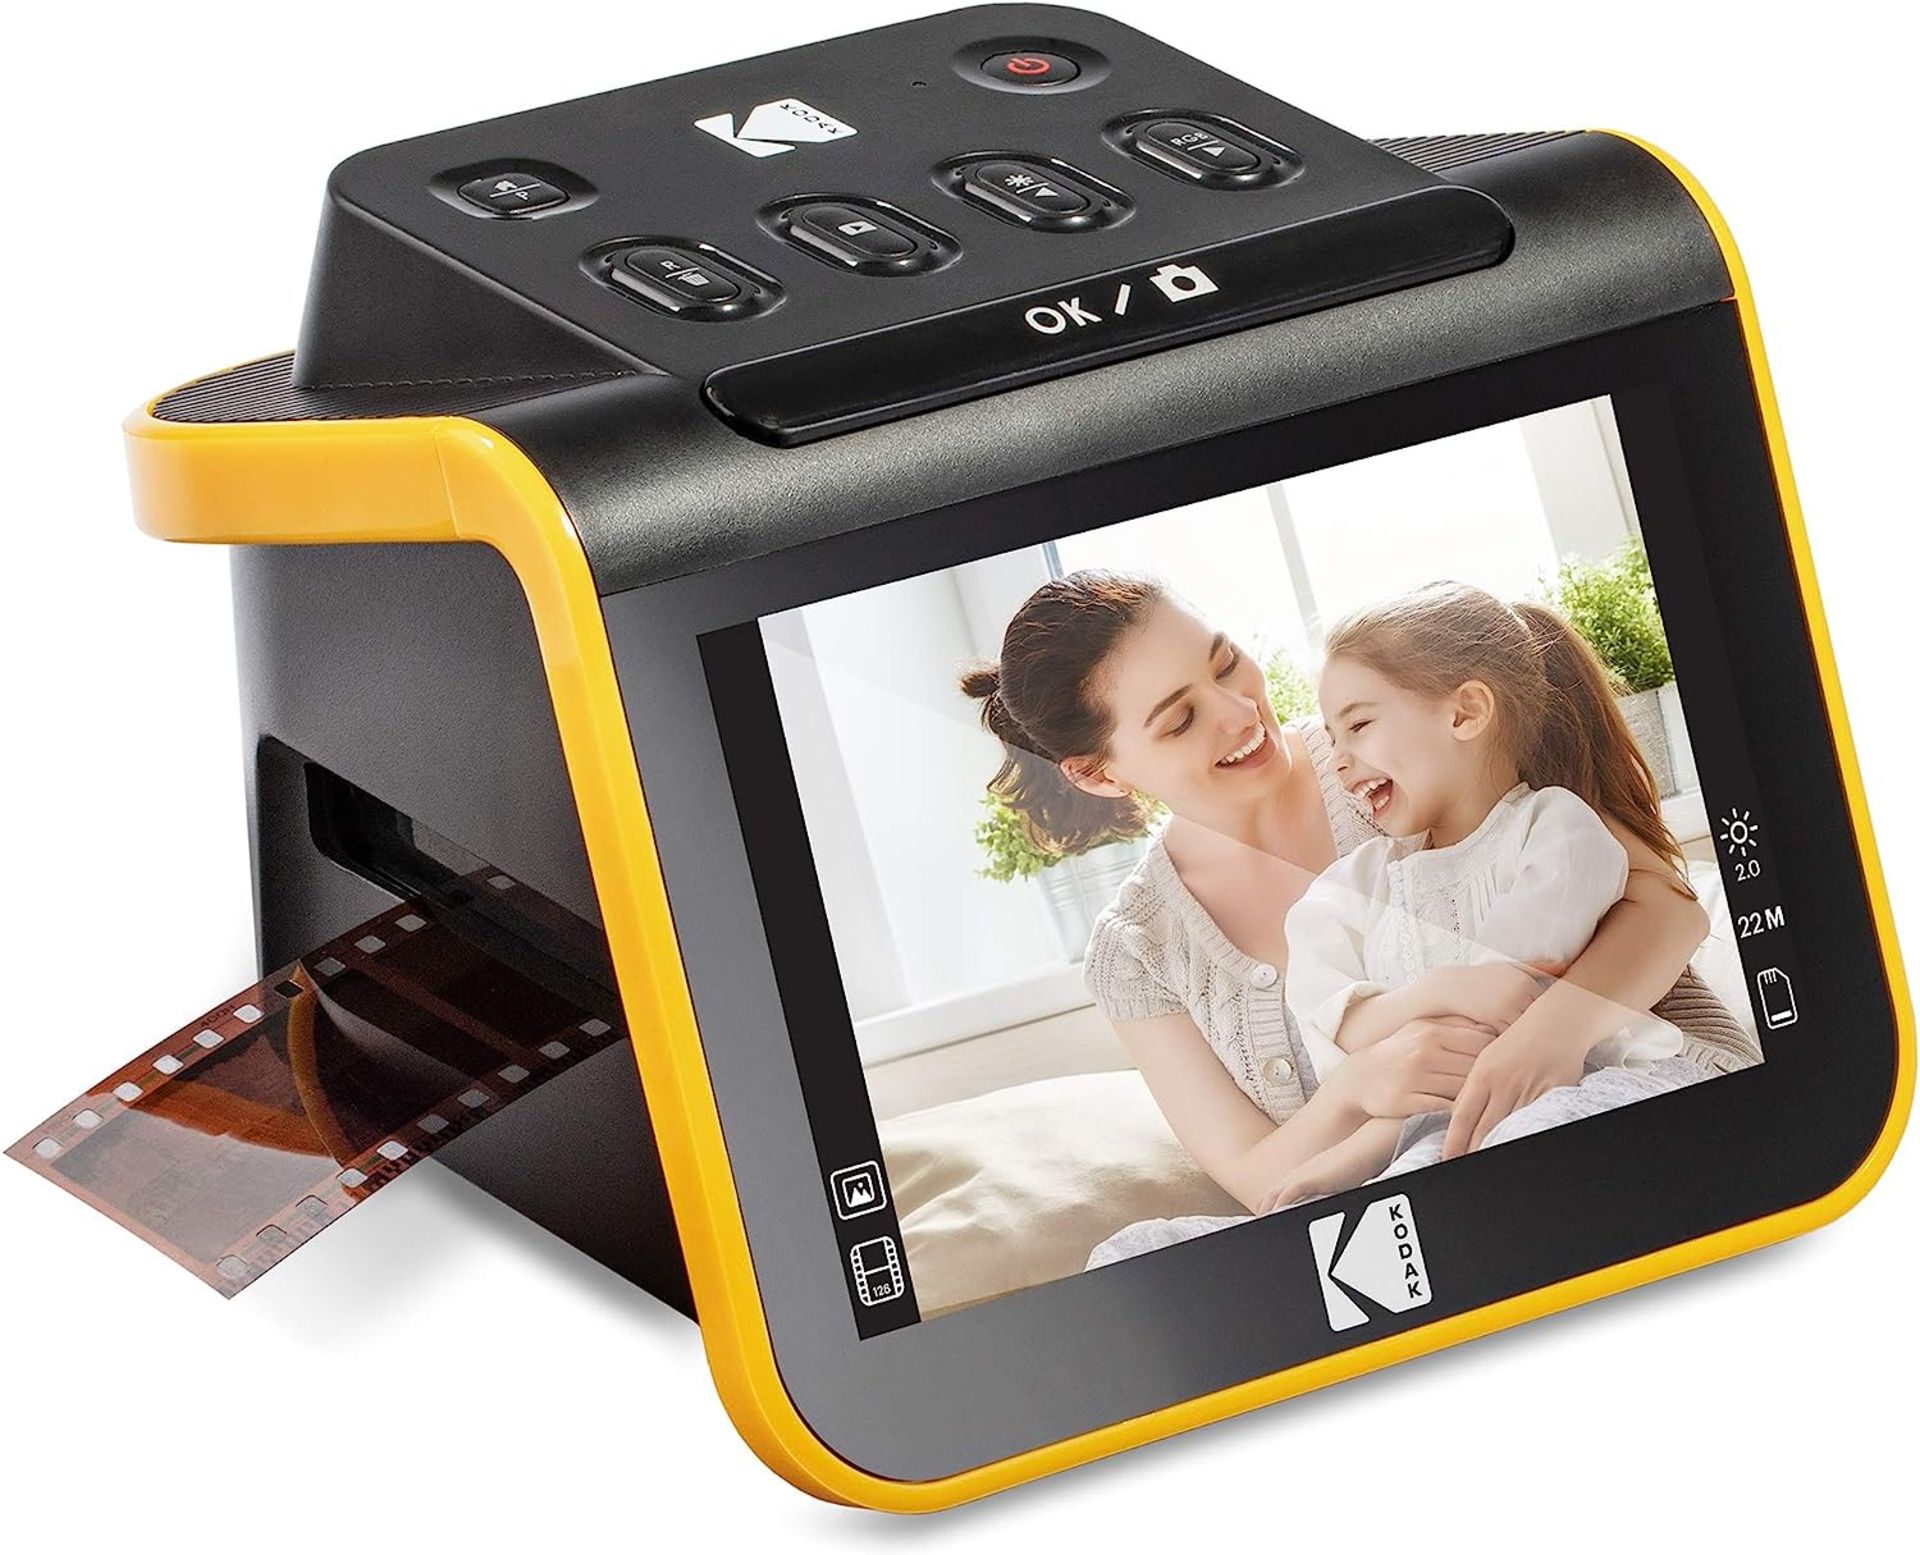 Kodak Digital Film Scanner, Film and Slide Scanner with 5" LCD Screen, Convert Color & B&W Negatives